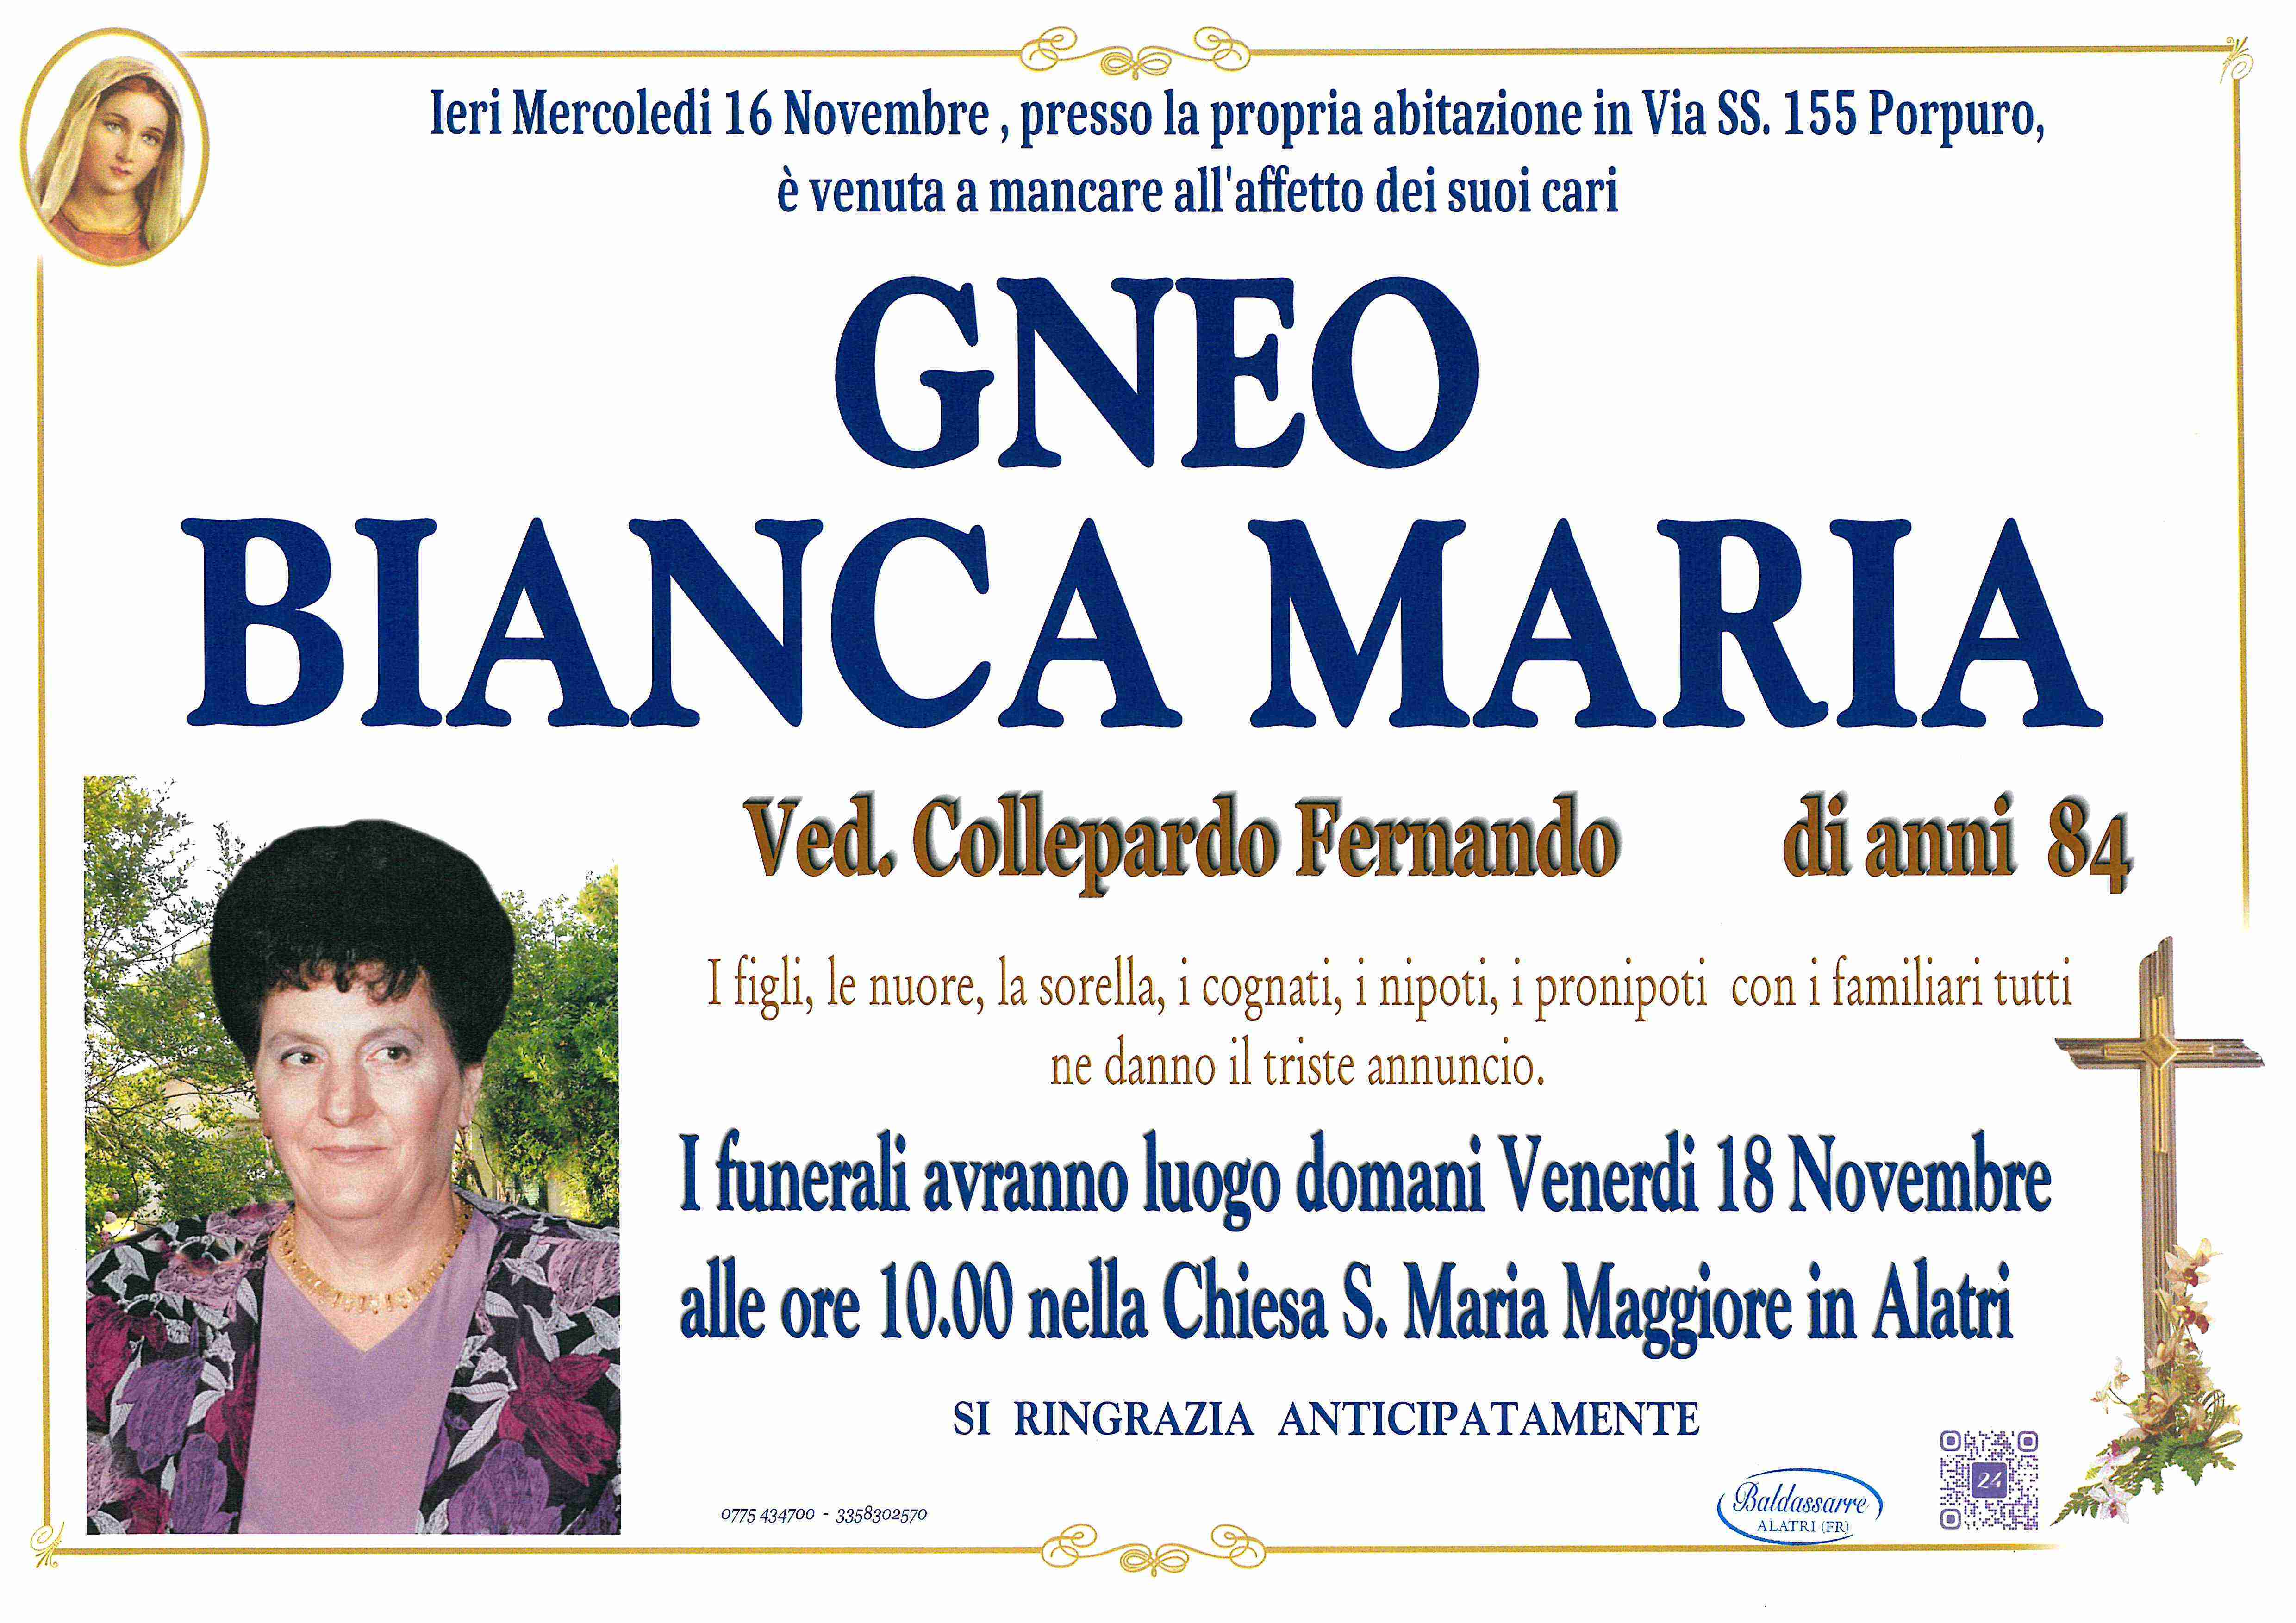 Bianca Maria Gneo